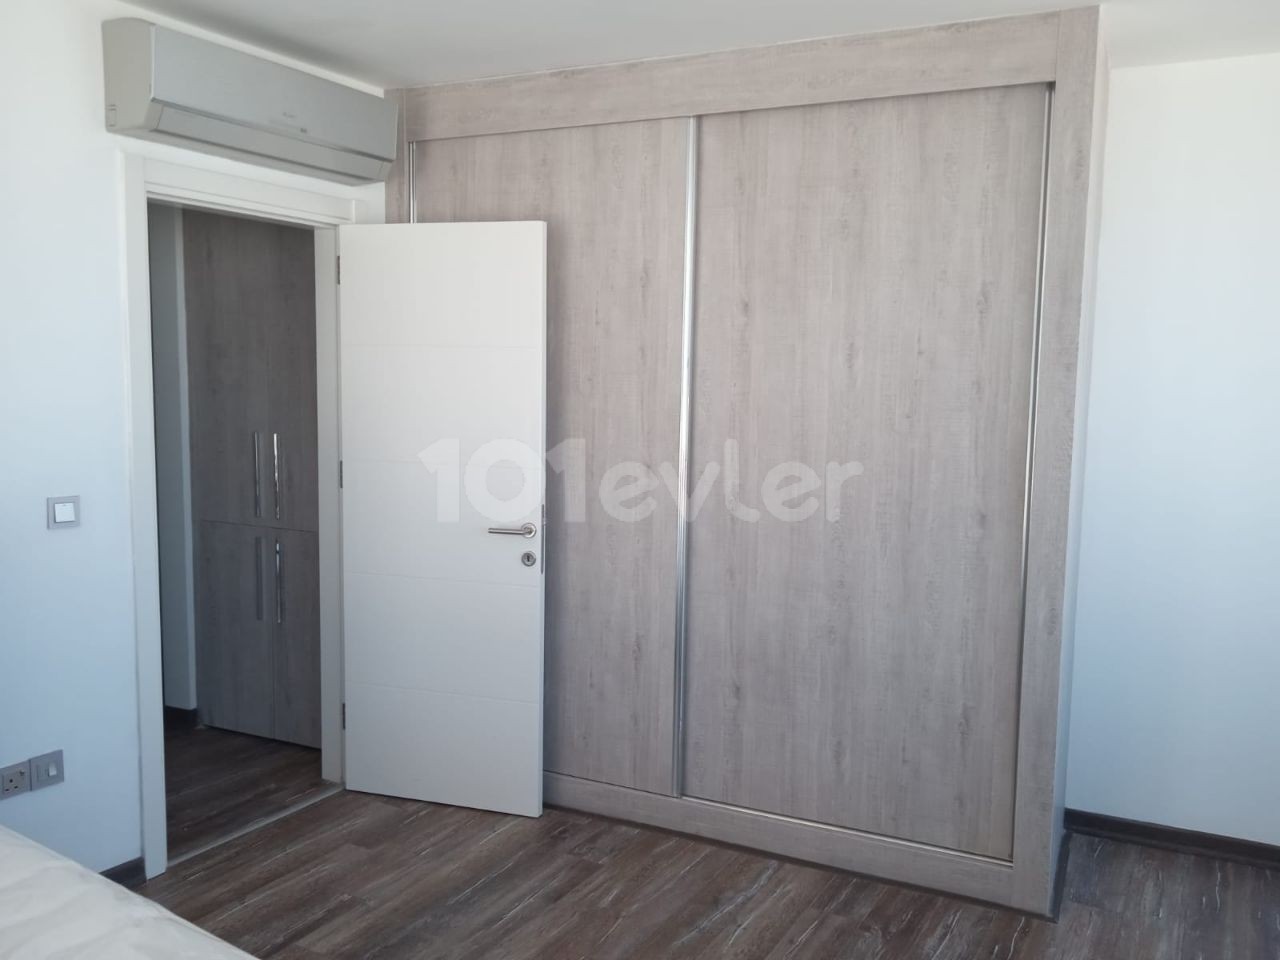 2 bedroom apartment for rent in Kyrenia Center